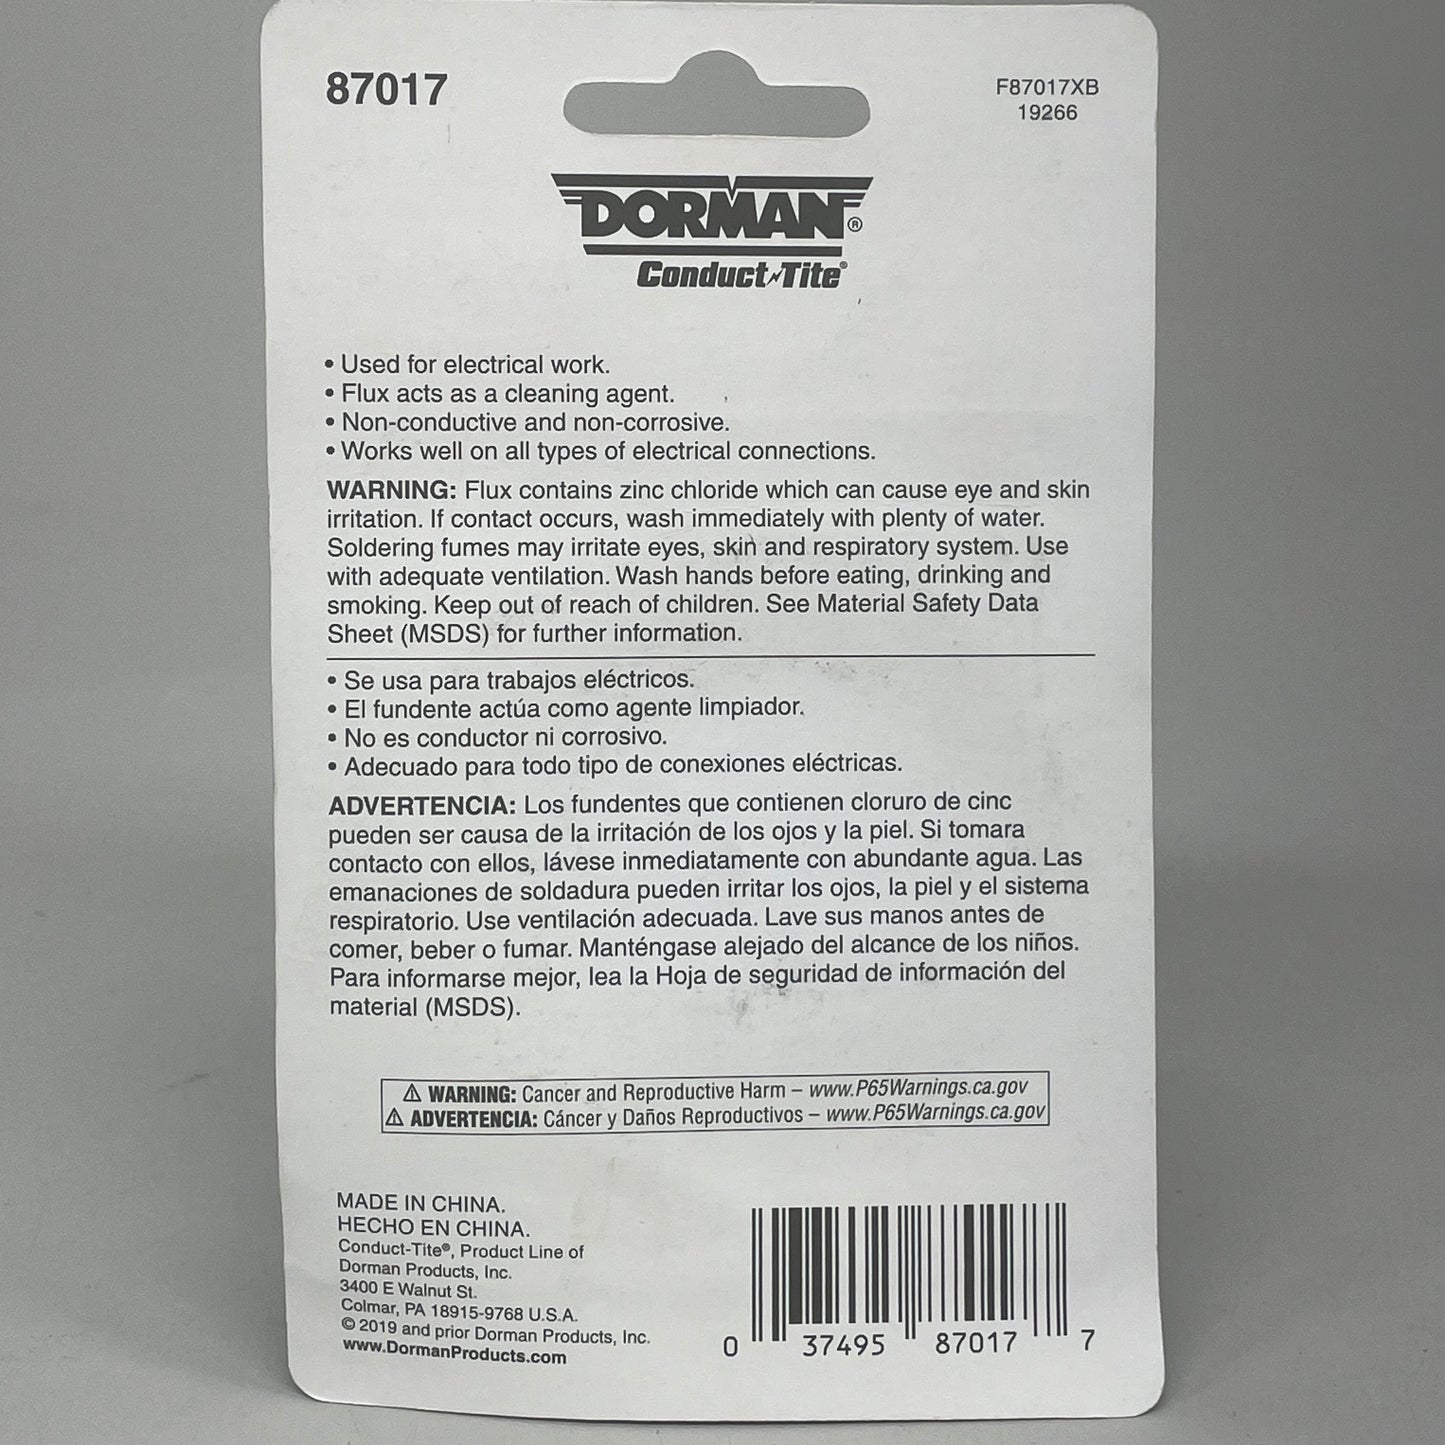 DORMAN (2 PACK) Lead-Free Rosin Core Solder 87017